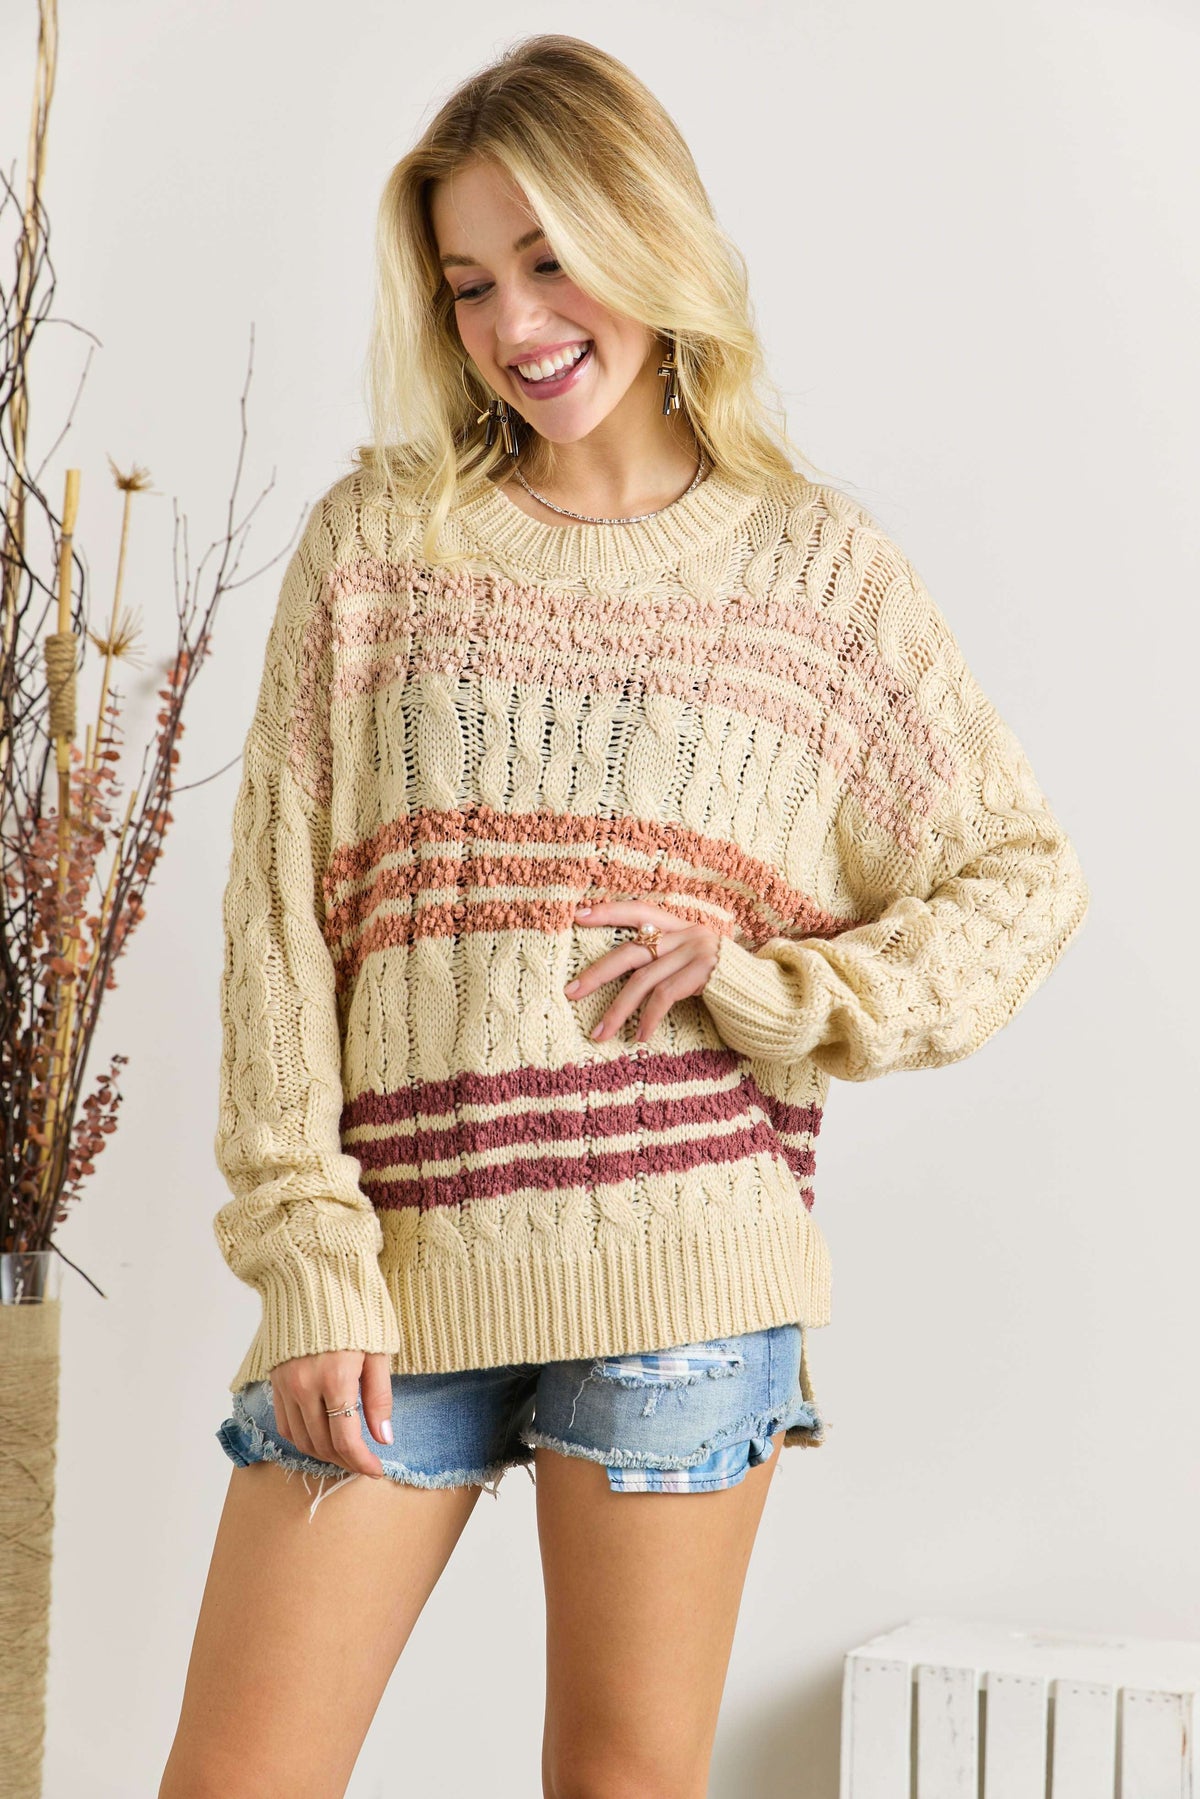 Fall Skies Knit Sweater * on sale